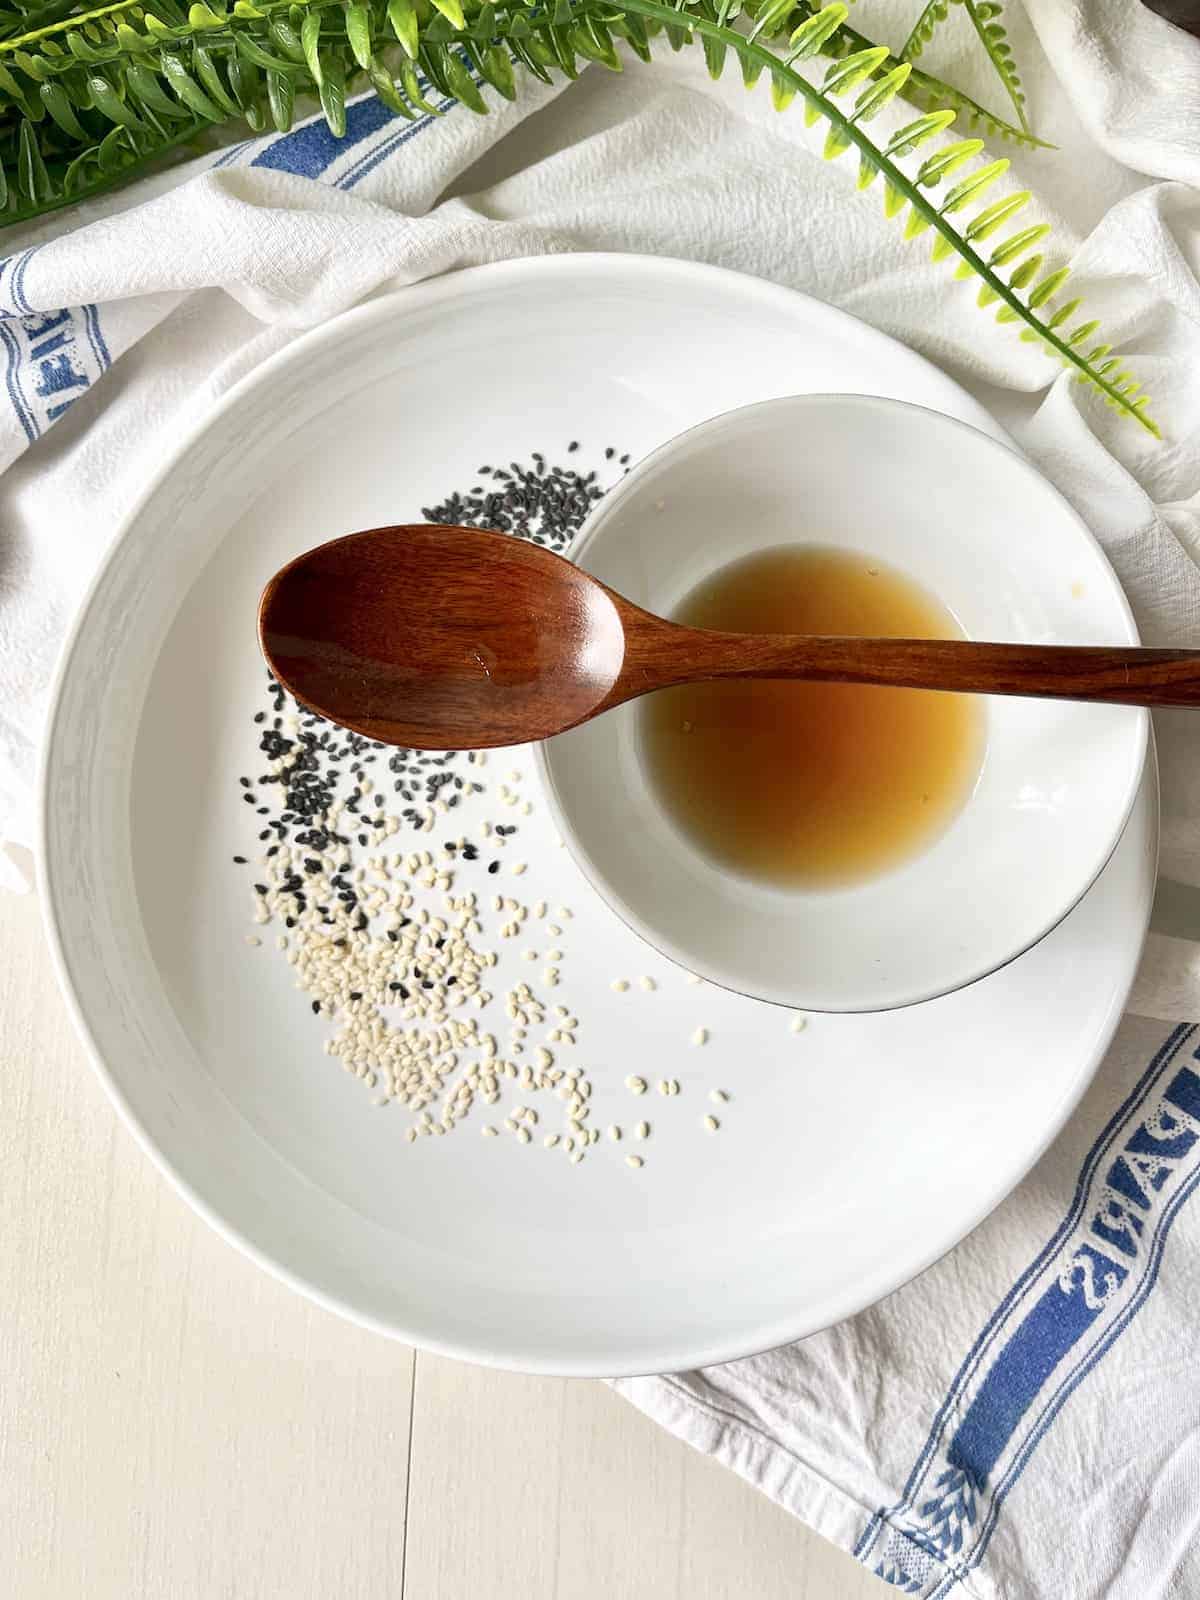 A bowl of homemade sesame oil next to white and black sesame seeds.